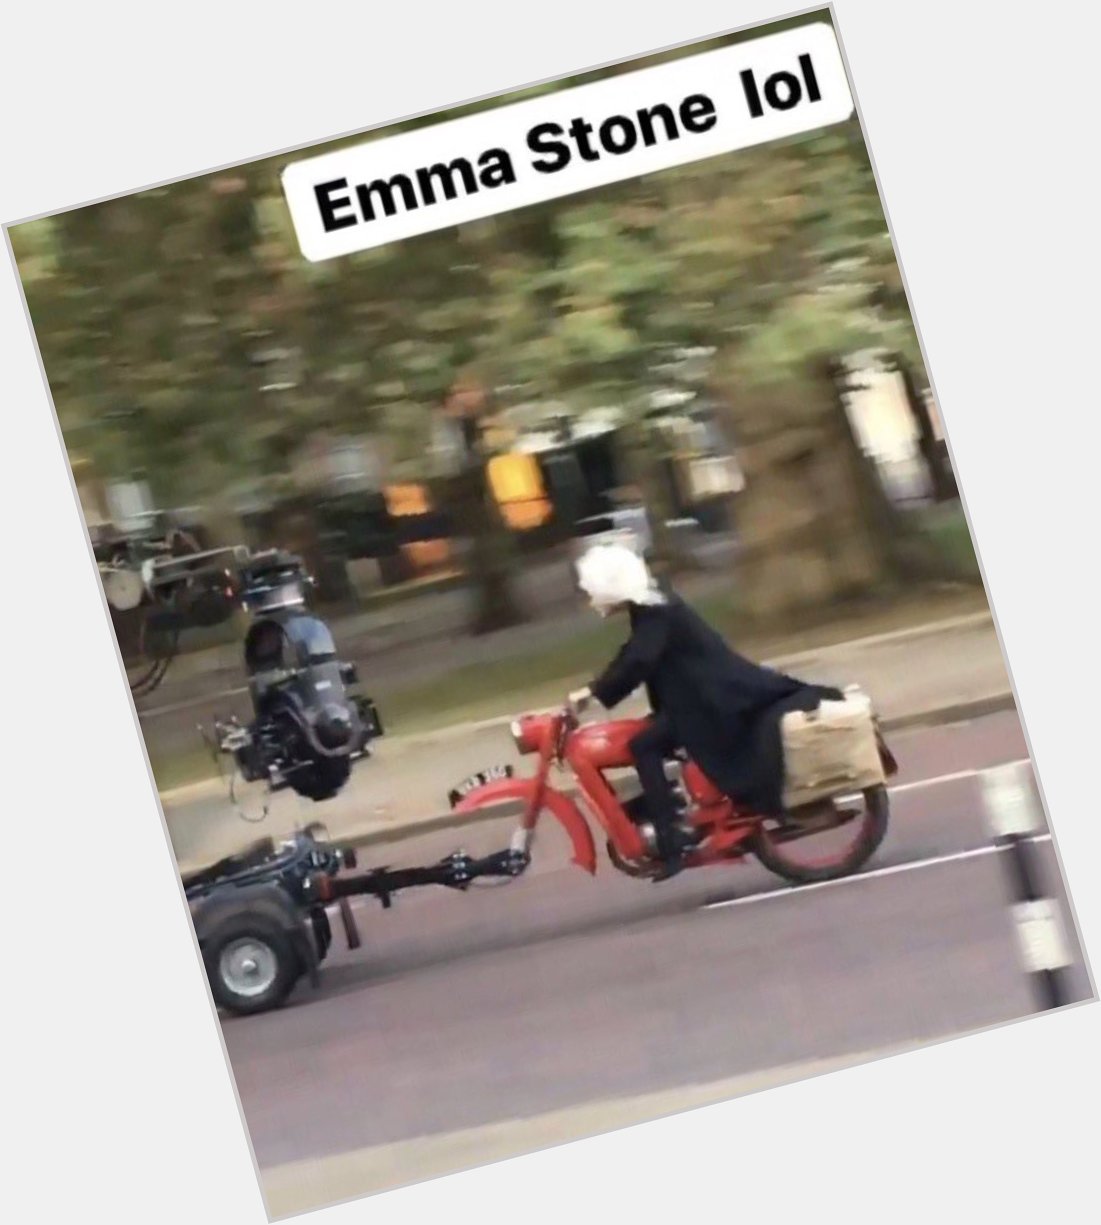 Happy bday Emma Stone 